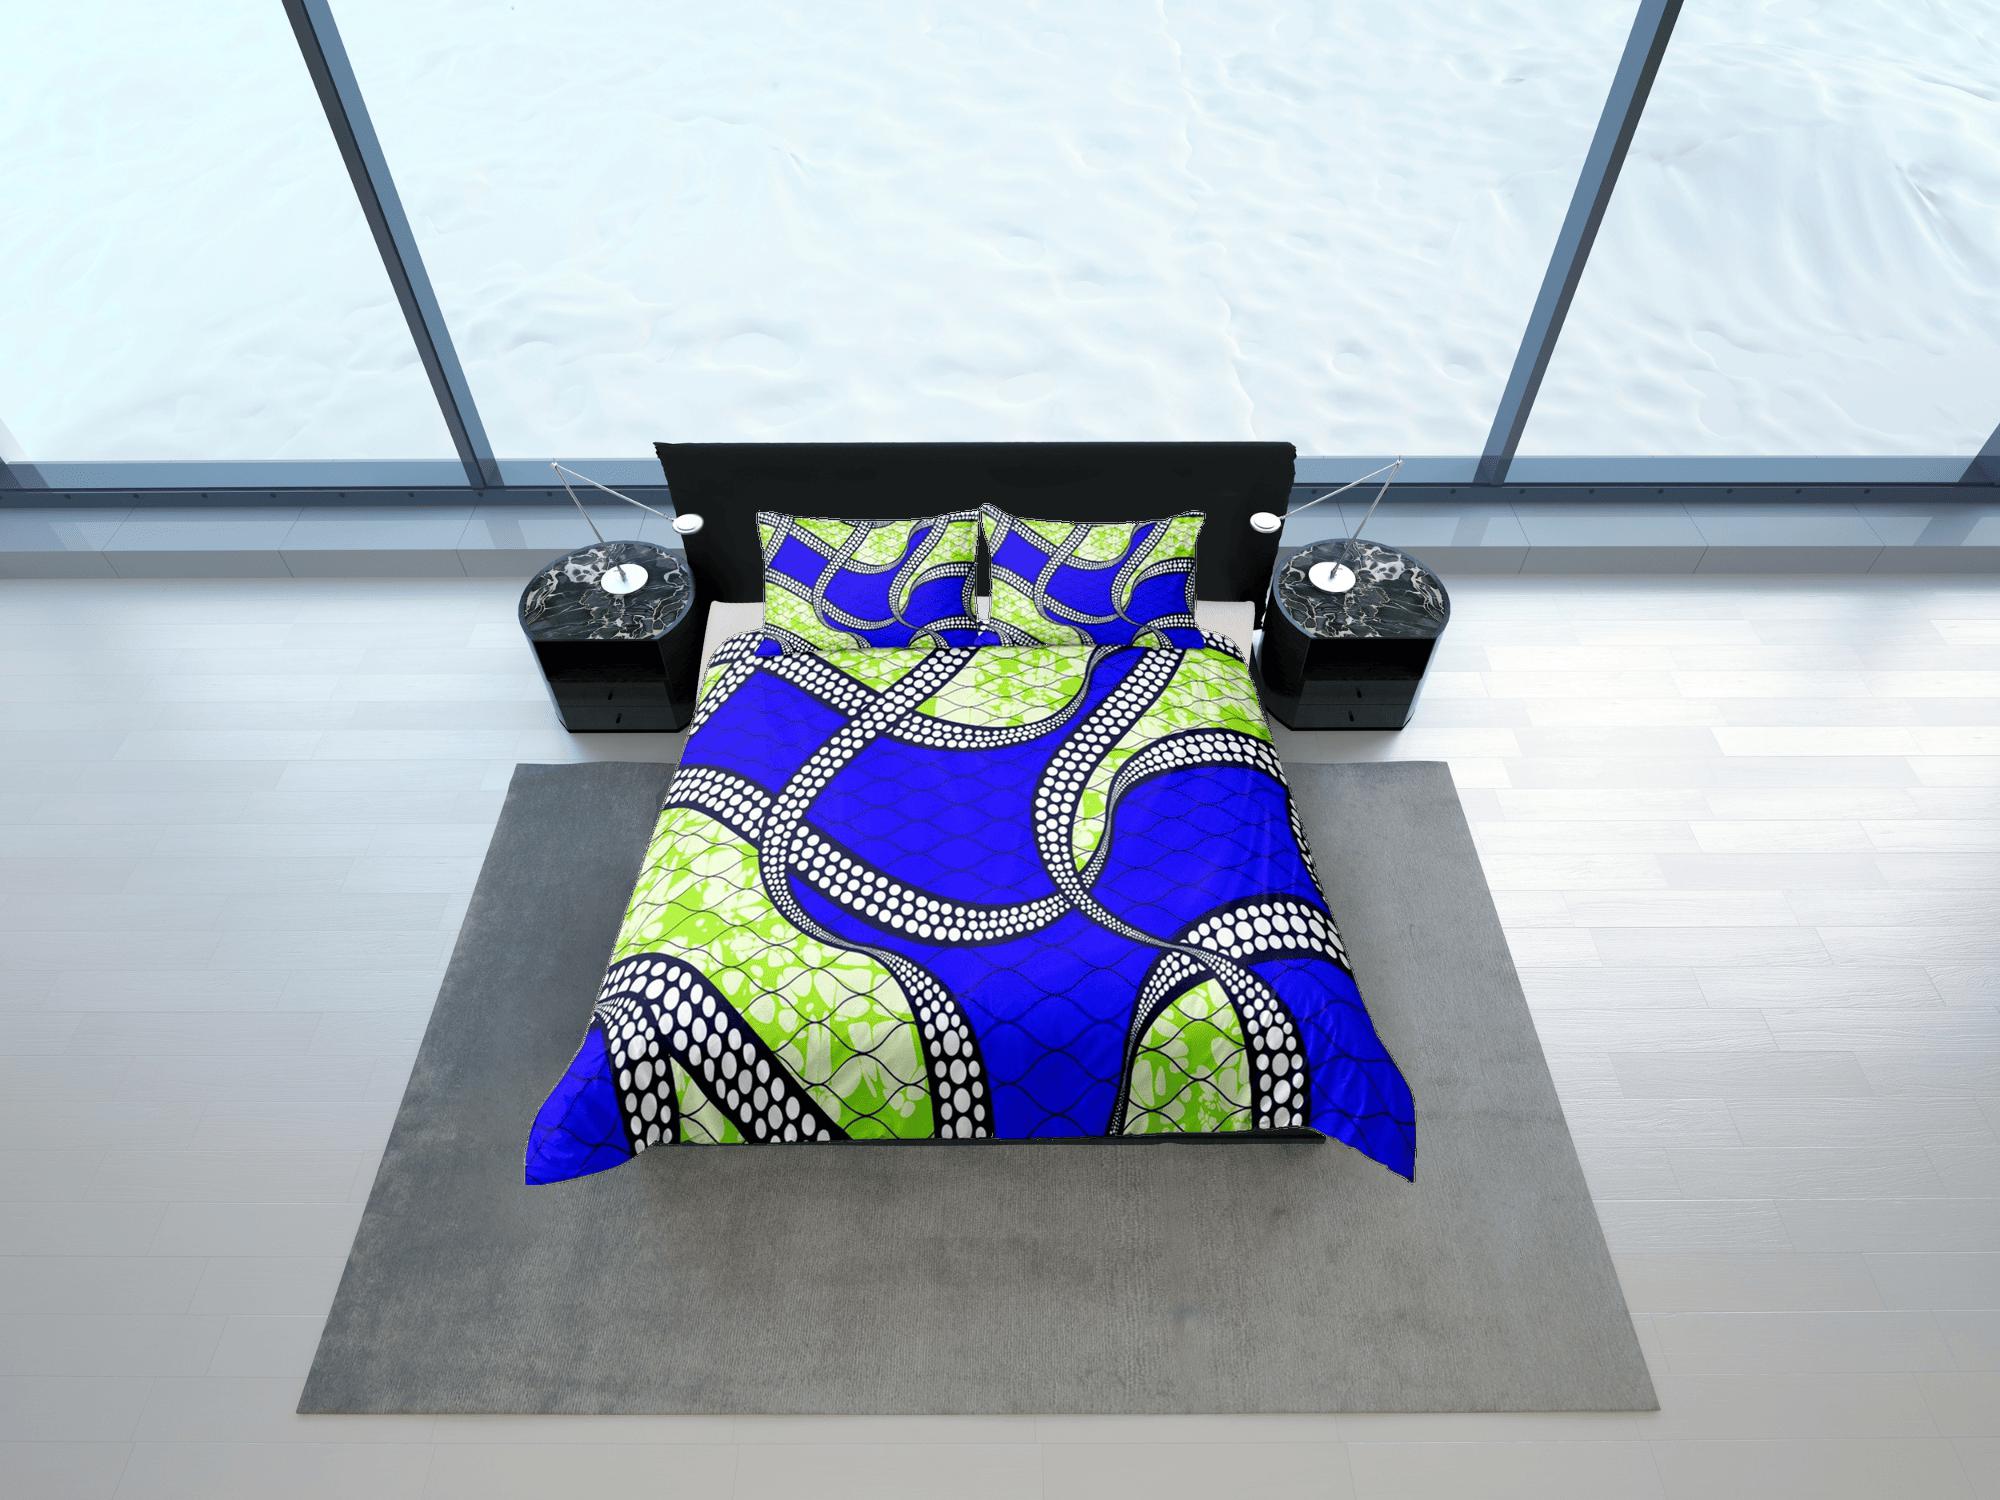 daintyduvet Unique african blue and green bedding set duvet cover, boho bedding ethnic tribal designs, afrocentric designer bedding, south african gift